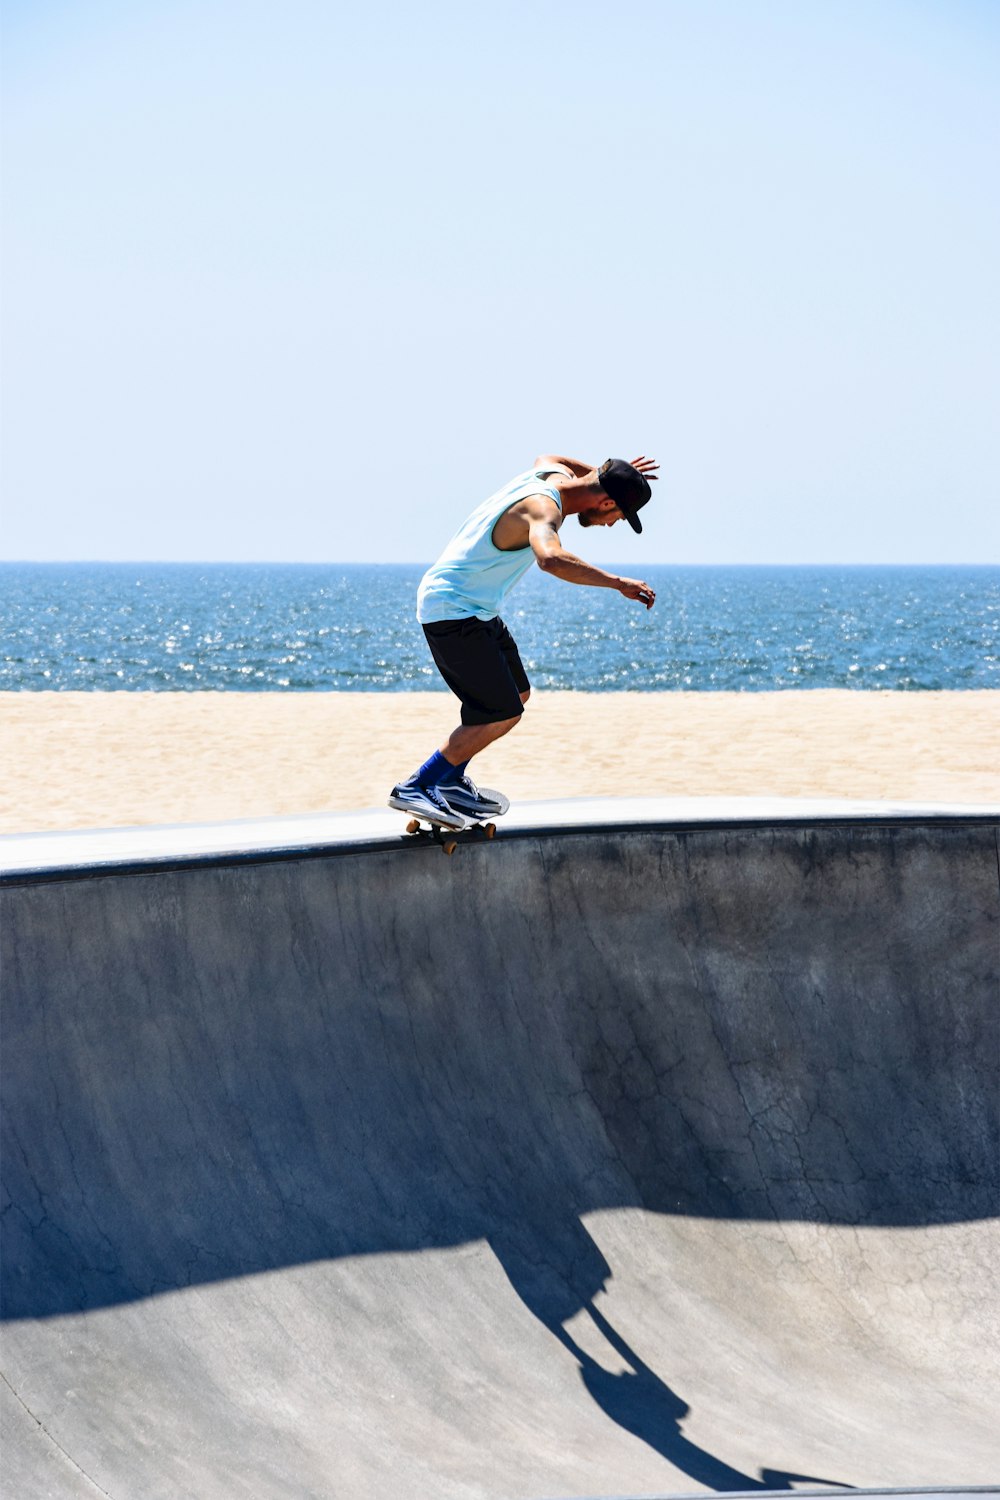 man riding skateboard doing trick